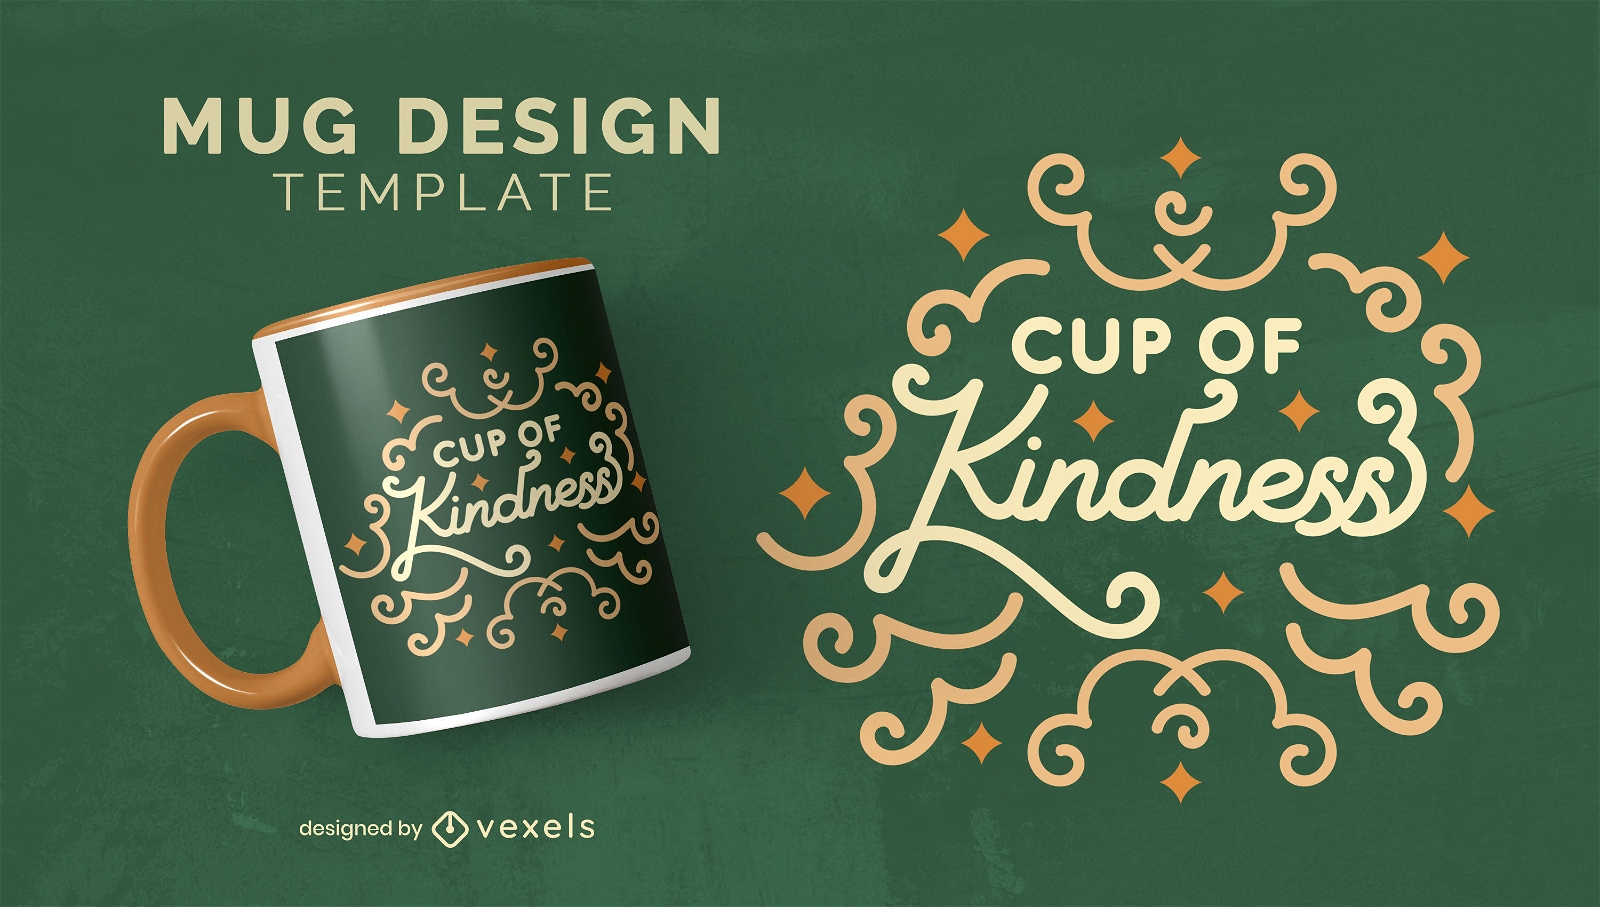 Cup of kindness mug design